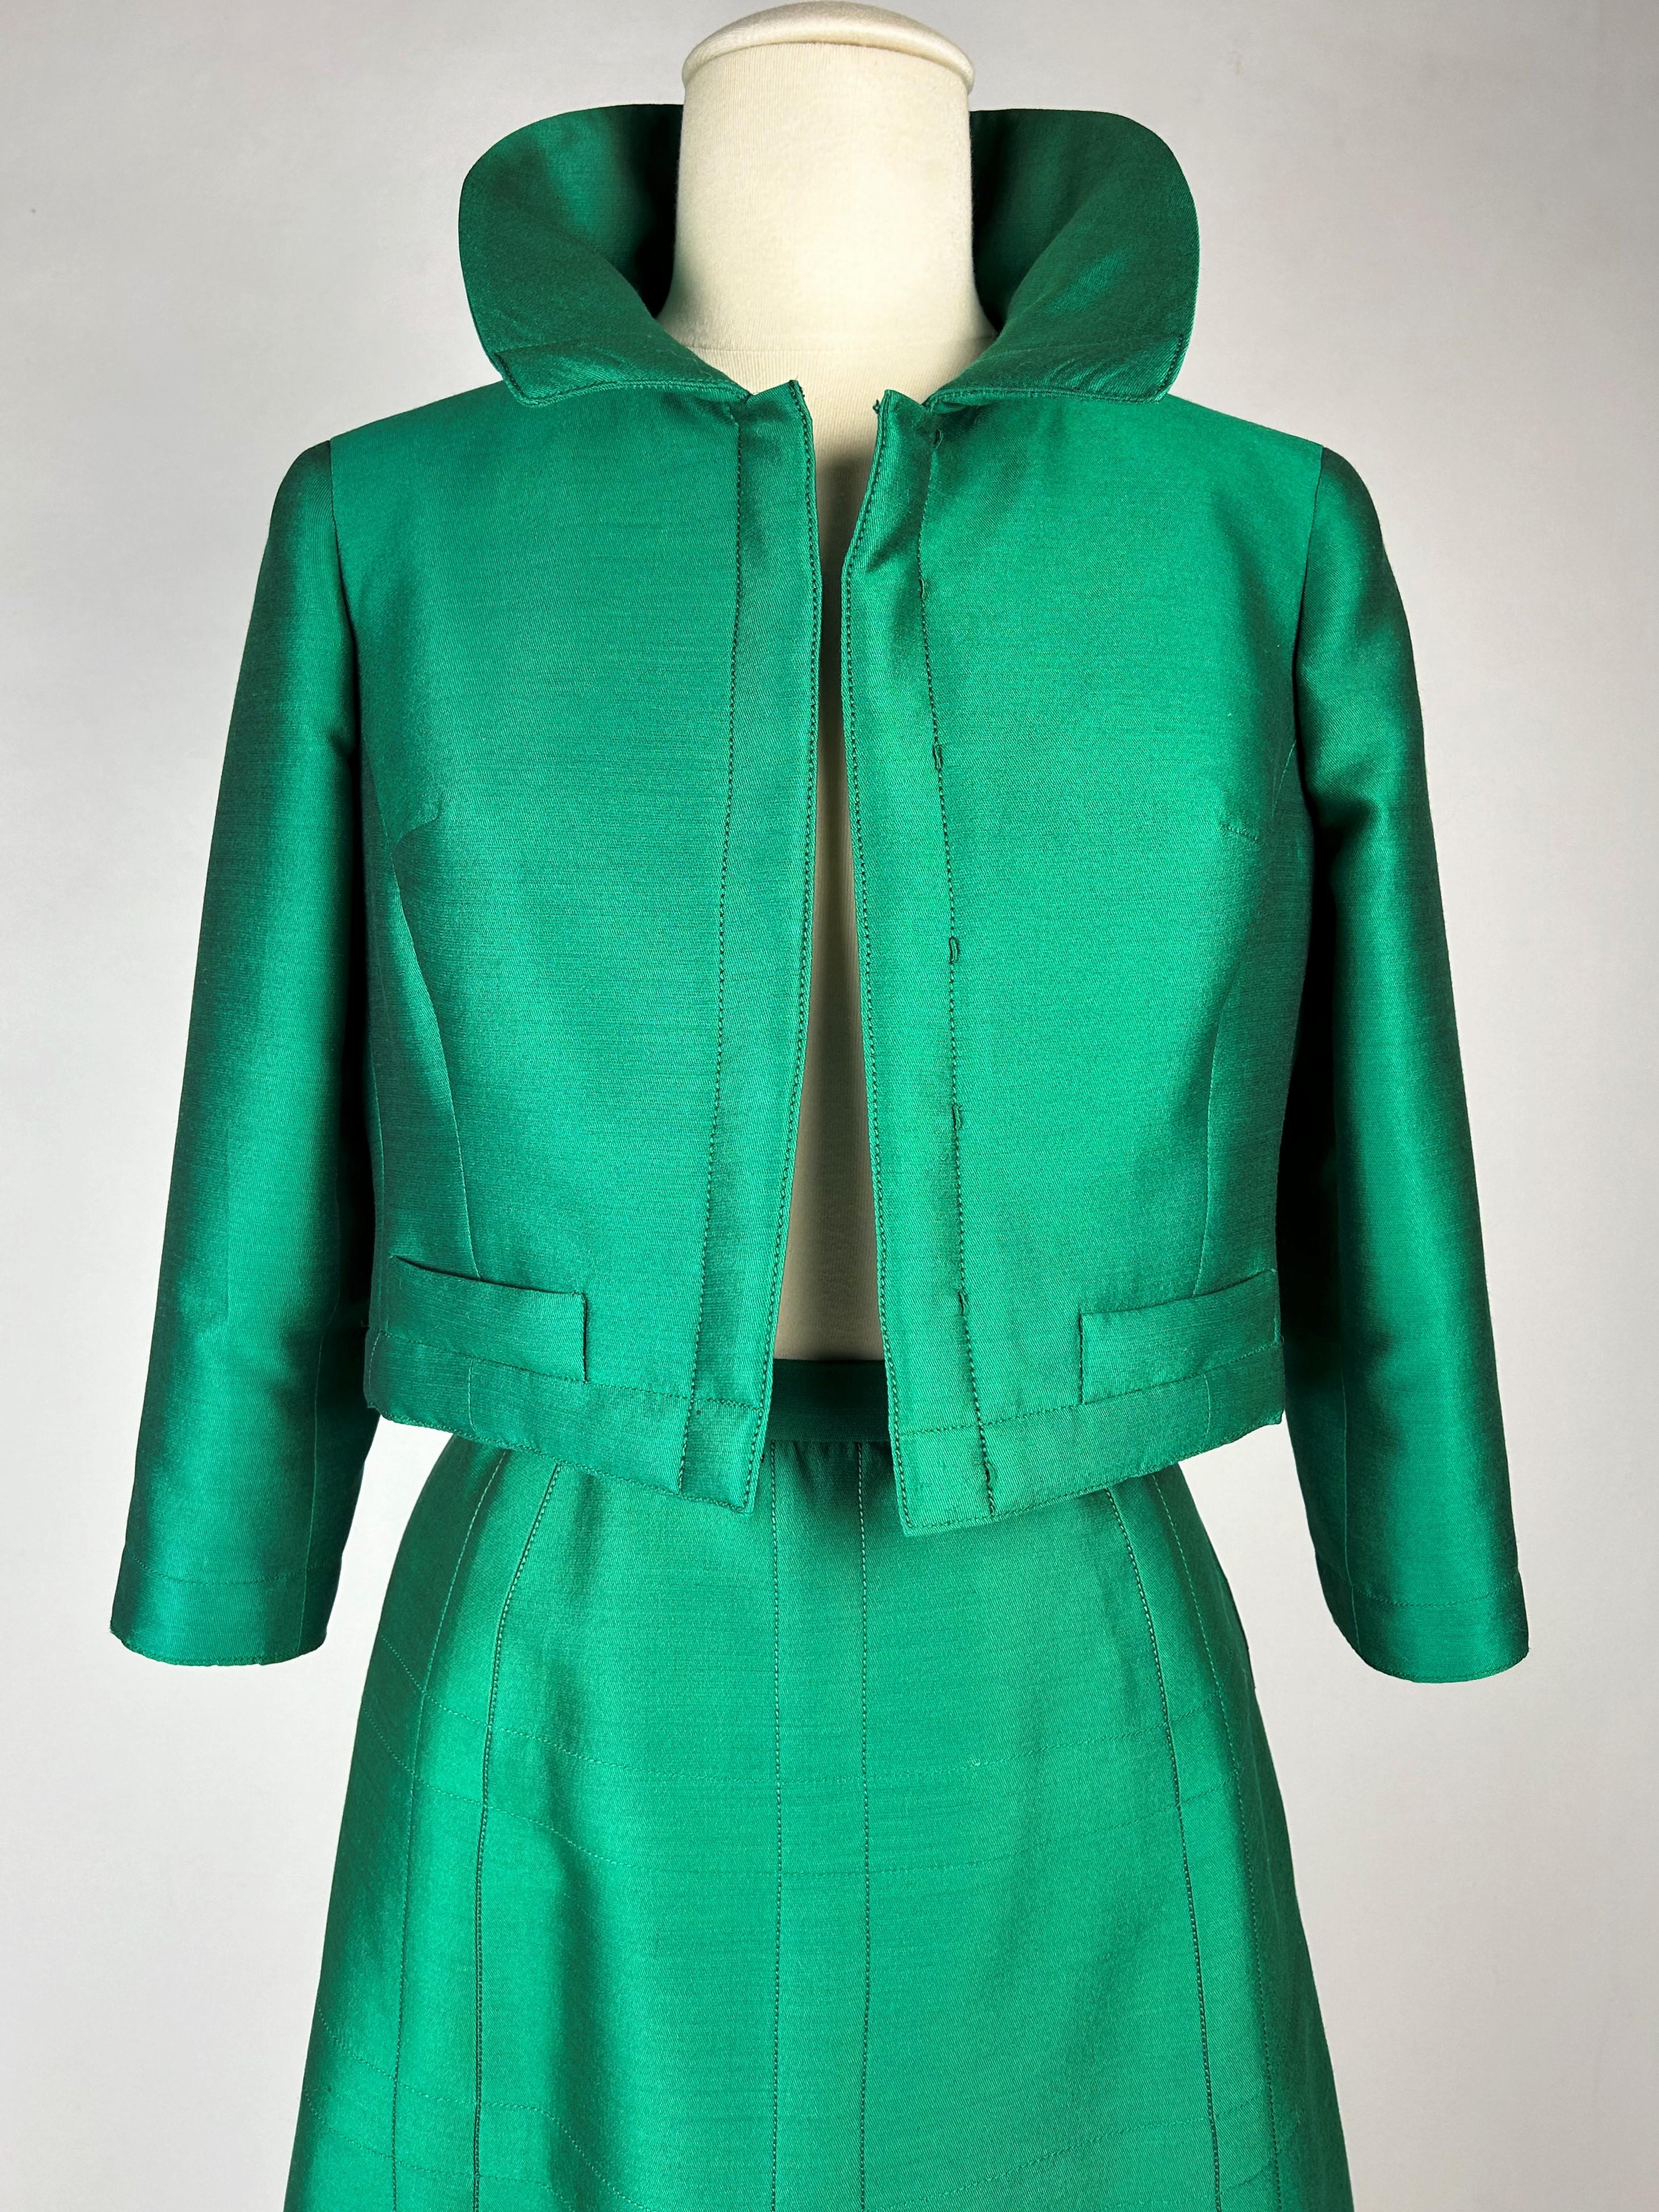 Tailleur jupe Demi-Couture Gazar Emeraude de Louis Féraud Circa 1968-1972 en vente 13